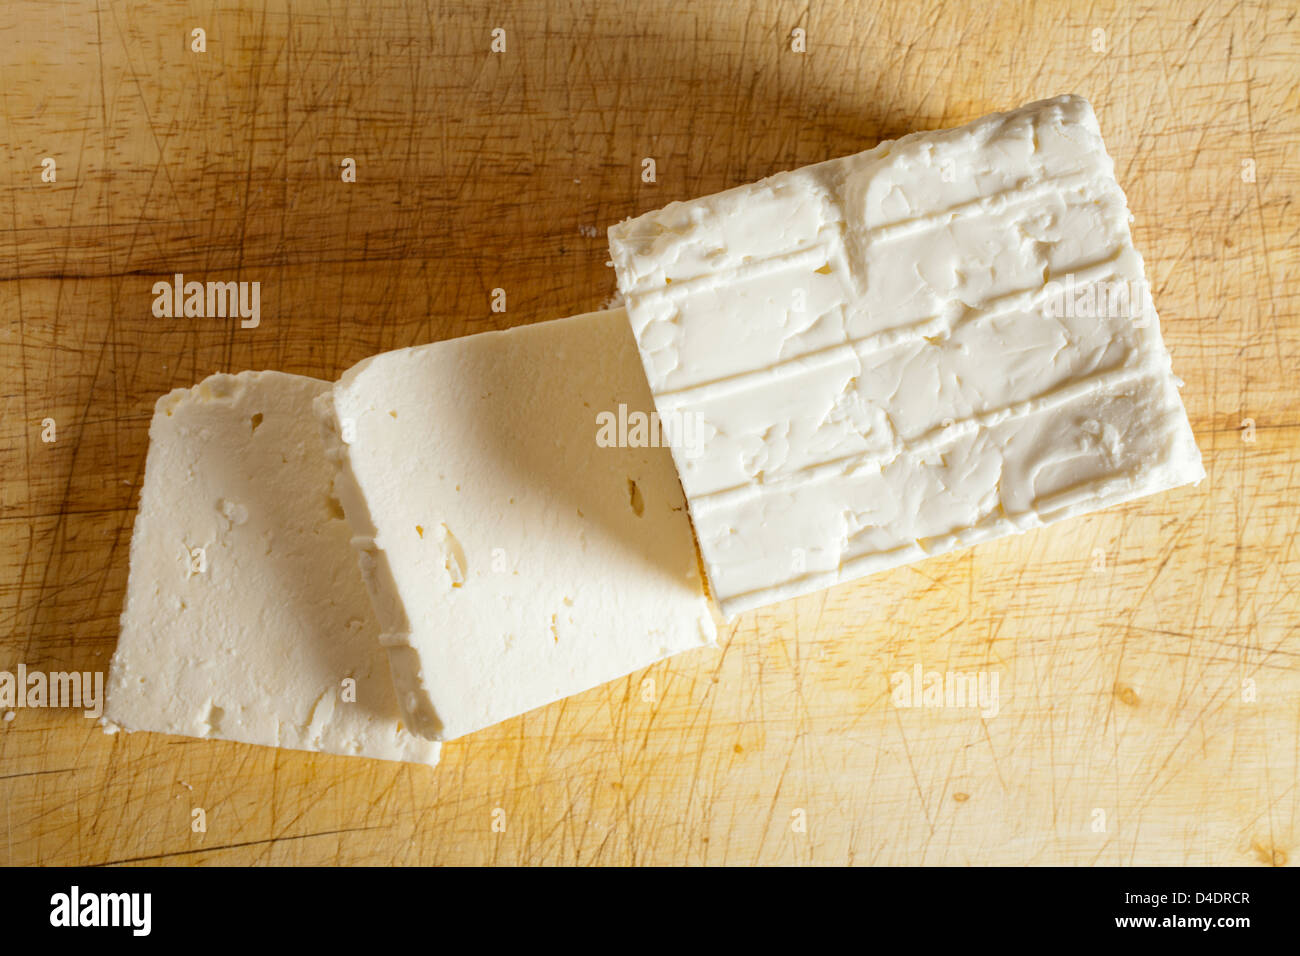 Block of feta cheese Stock Photo